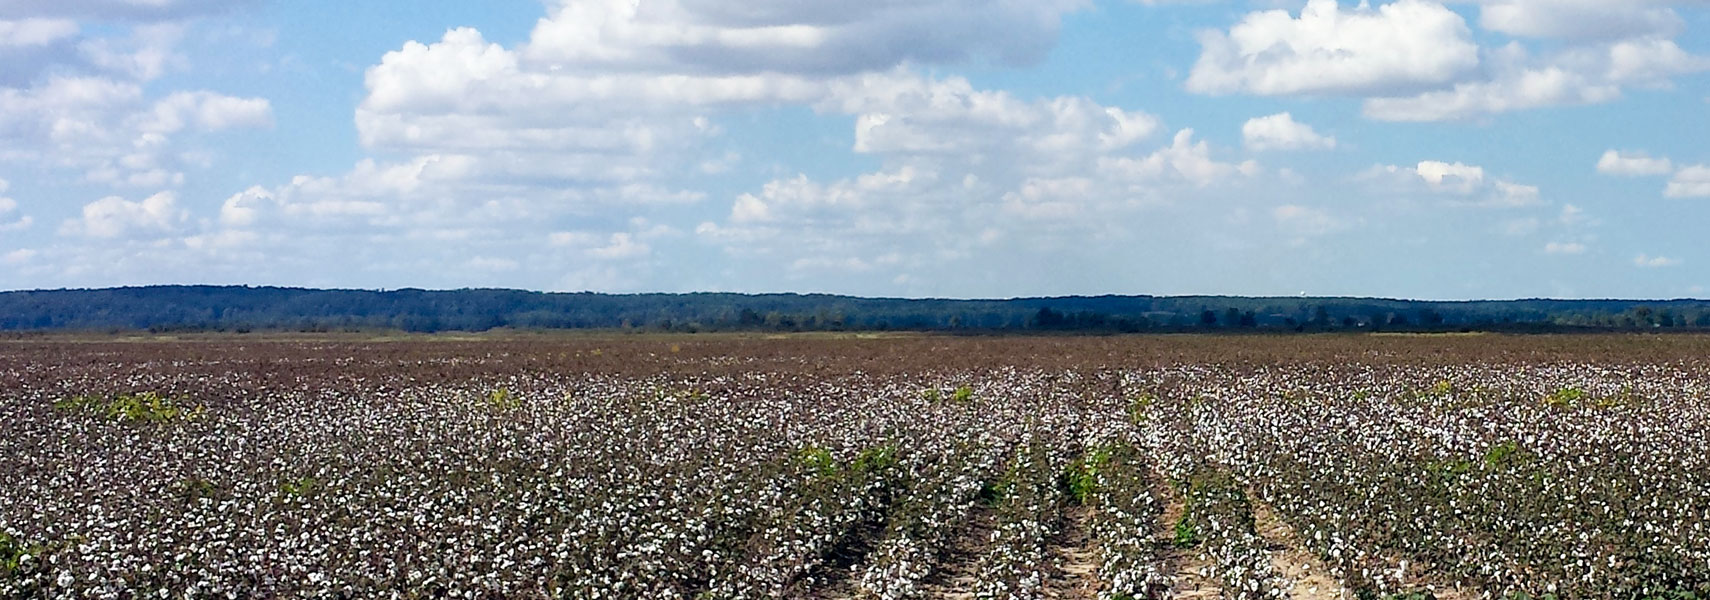 Cotton fields in Poinsett County, Arkansas